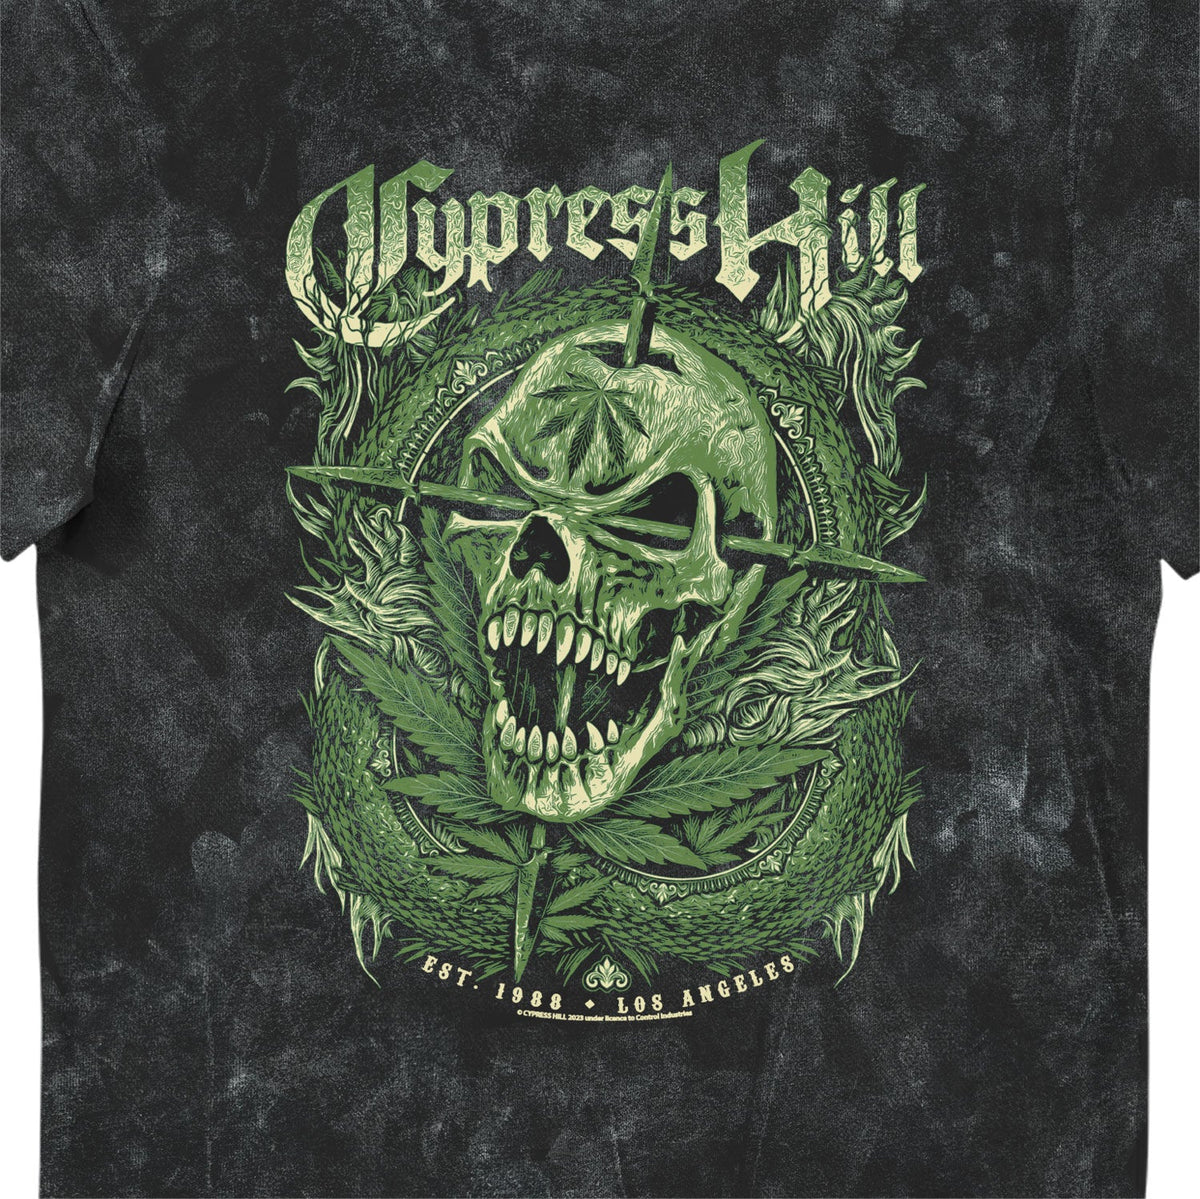 Cypress Hill Skull & Arrows T-Shirt